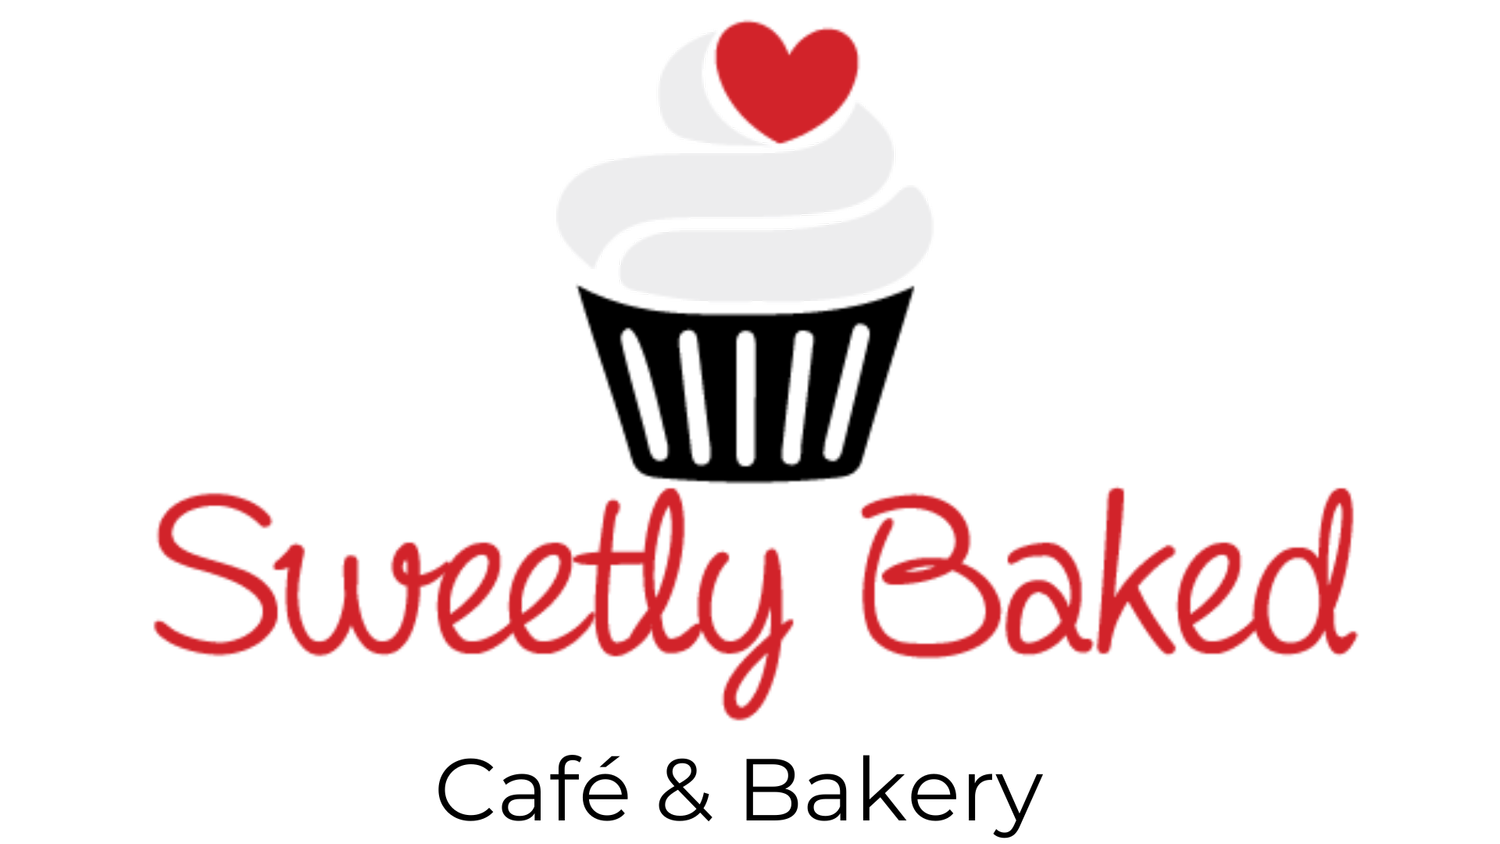 Sweetly Baked